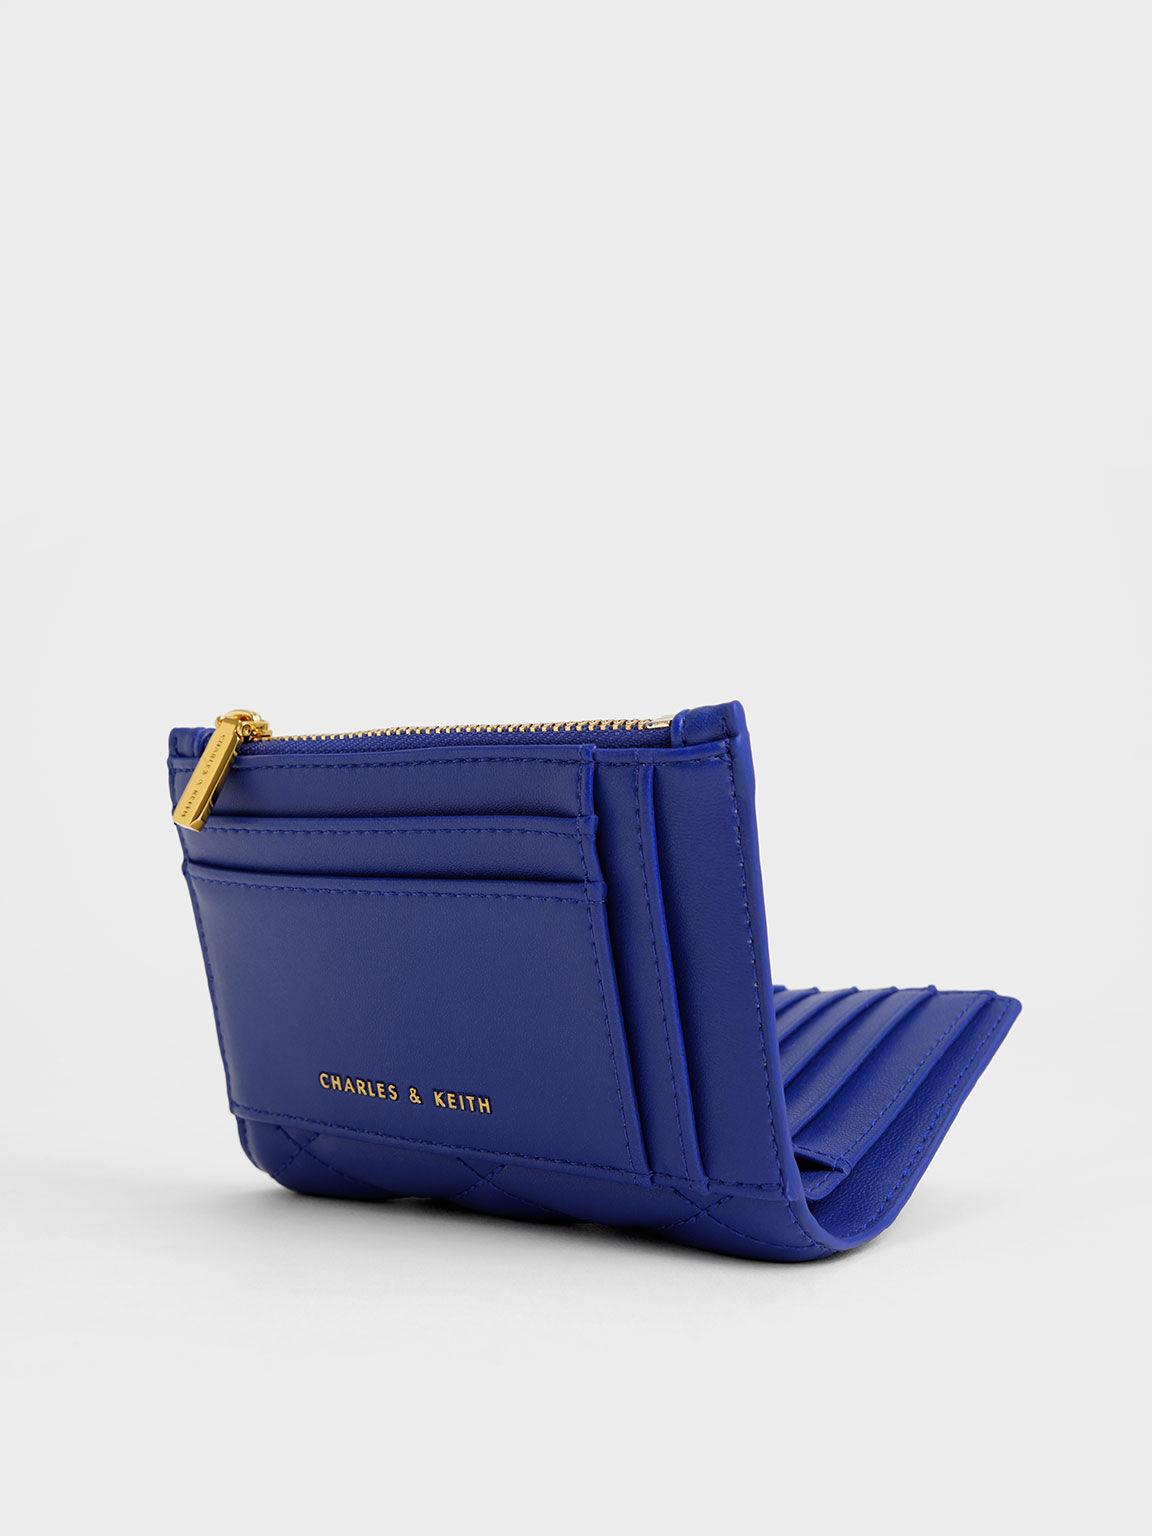 Lillie Quilted Mini Wallet, Cobalt, hi-res